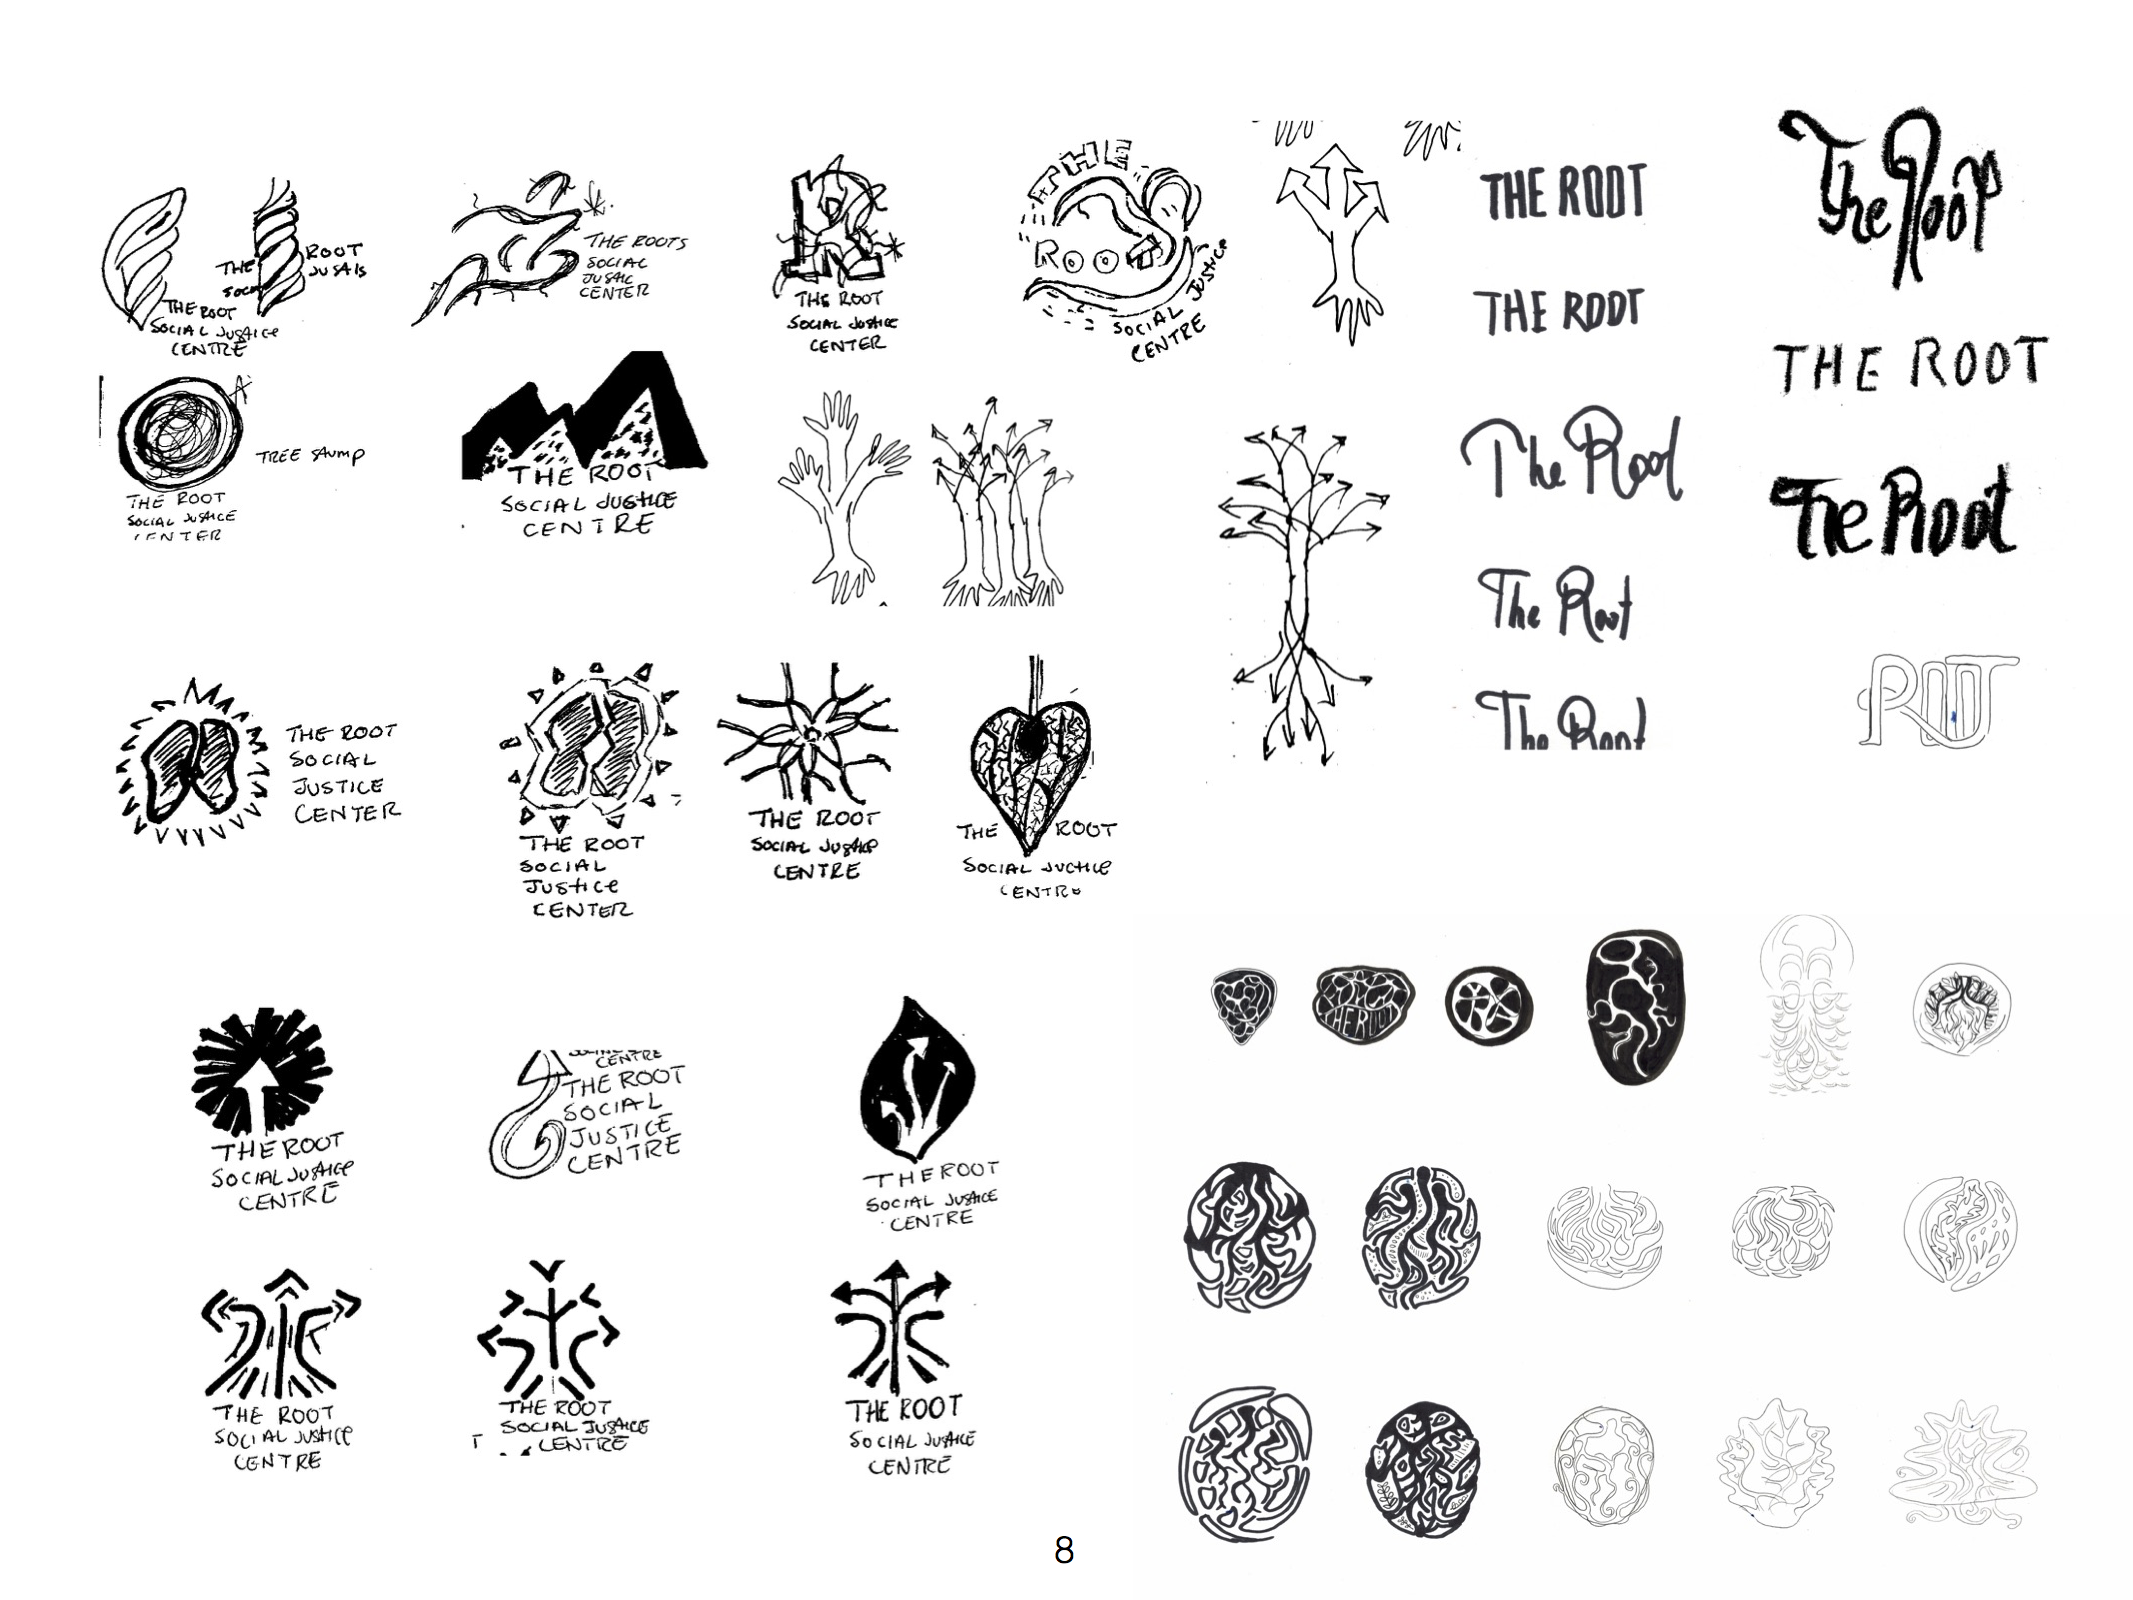 A couple dozen black & white hand drawn logo sketches